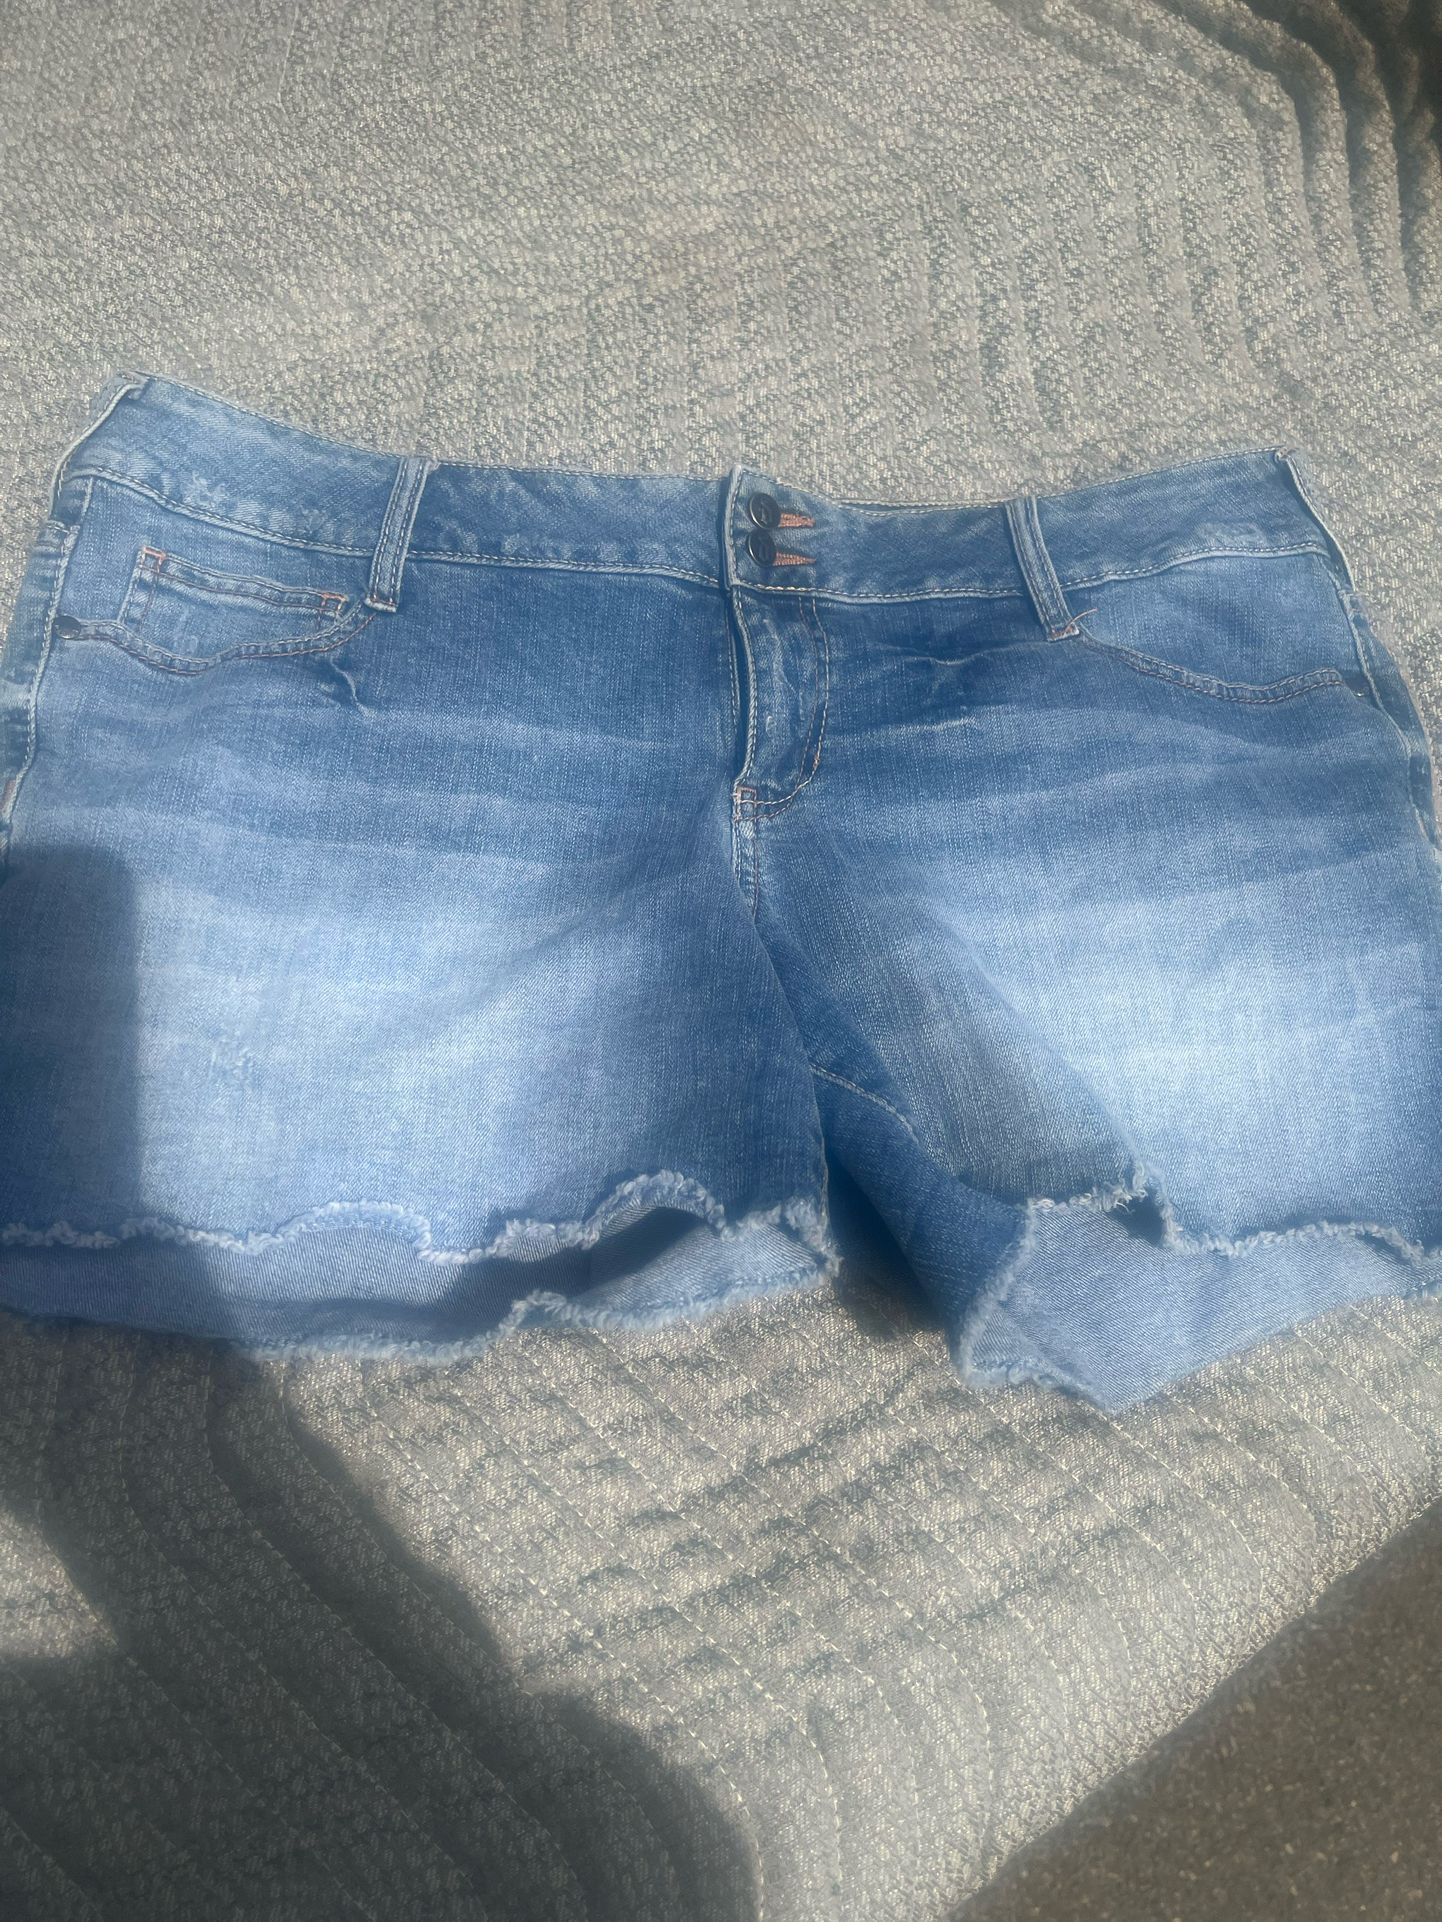 Woman’s Decree Jean Shorts Size 17